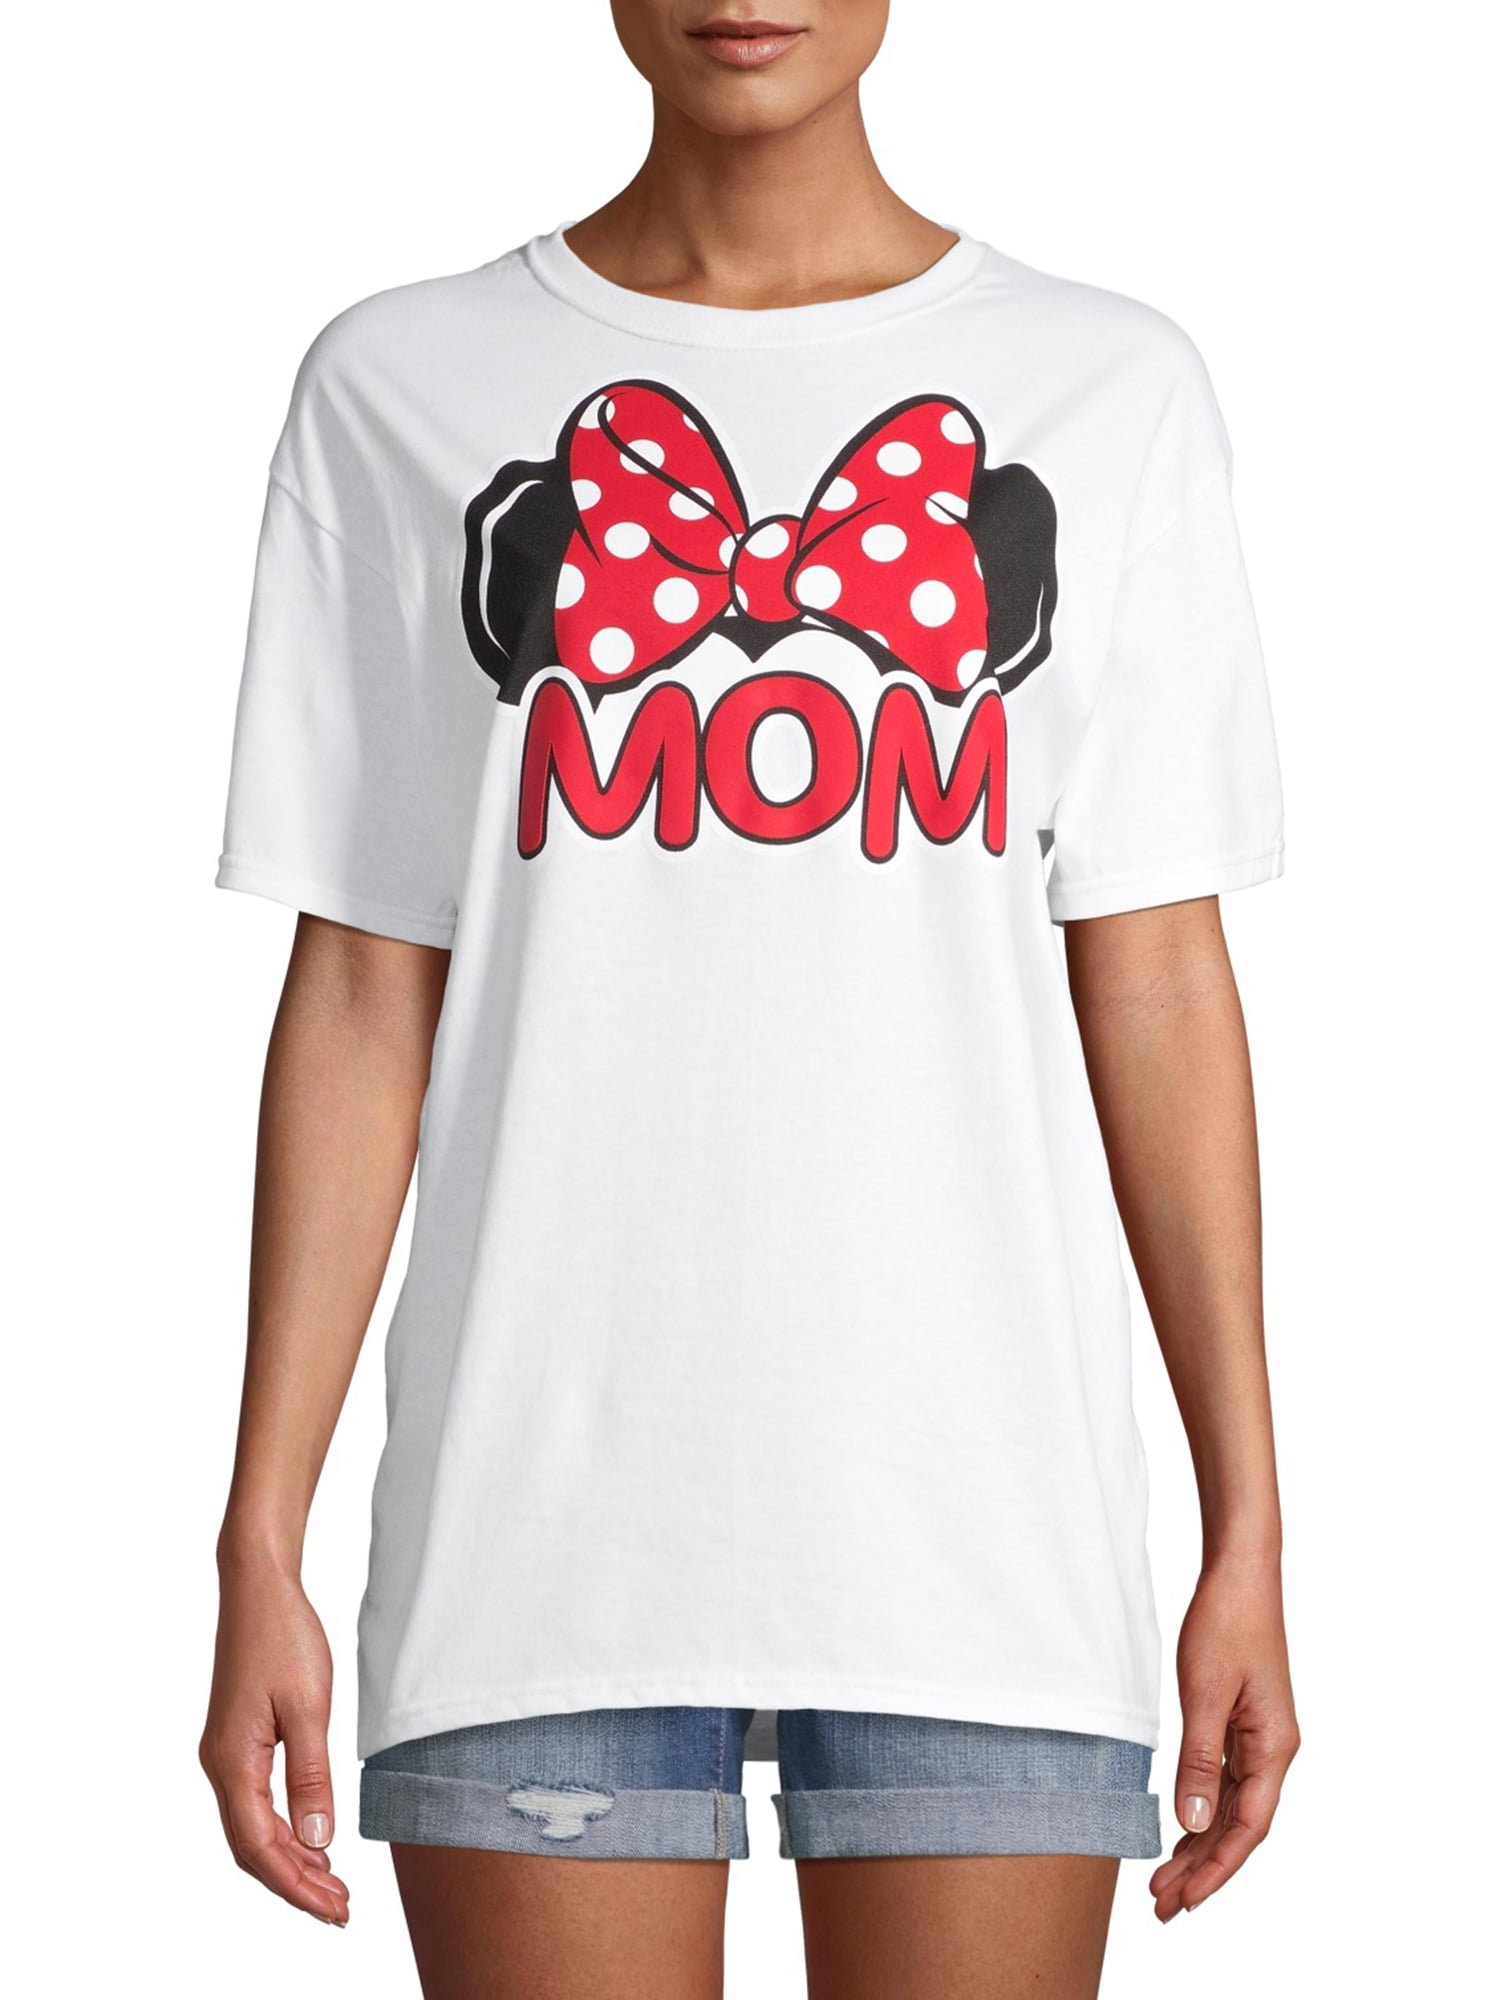 Fathers day gift Funny Dad Disney Shirt Toy Story Alien Shirt Toy Story Shirt Mom Shirt Disney Family Shirt TH-TL Disney Dad Shirt